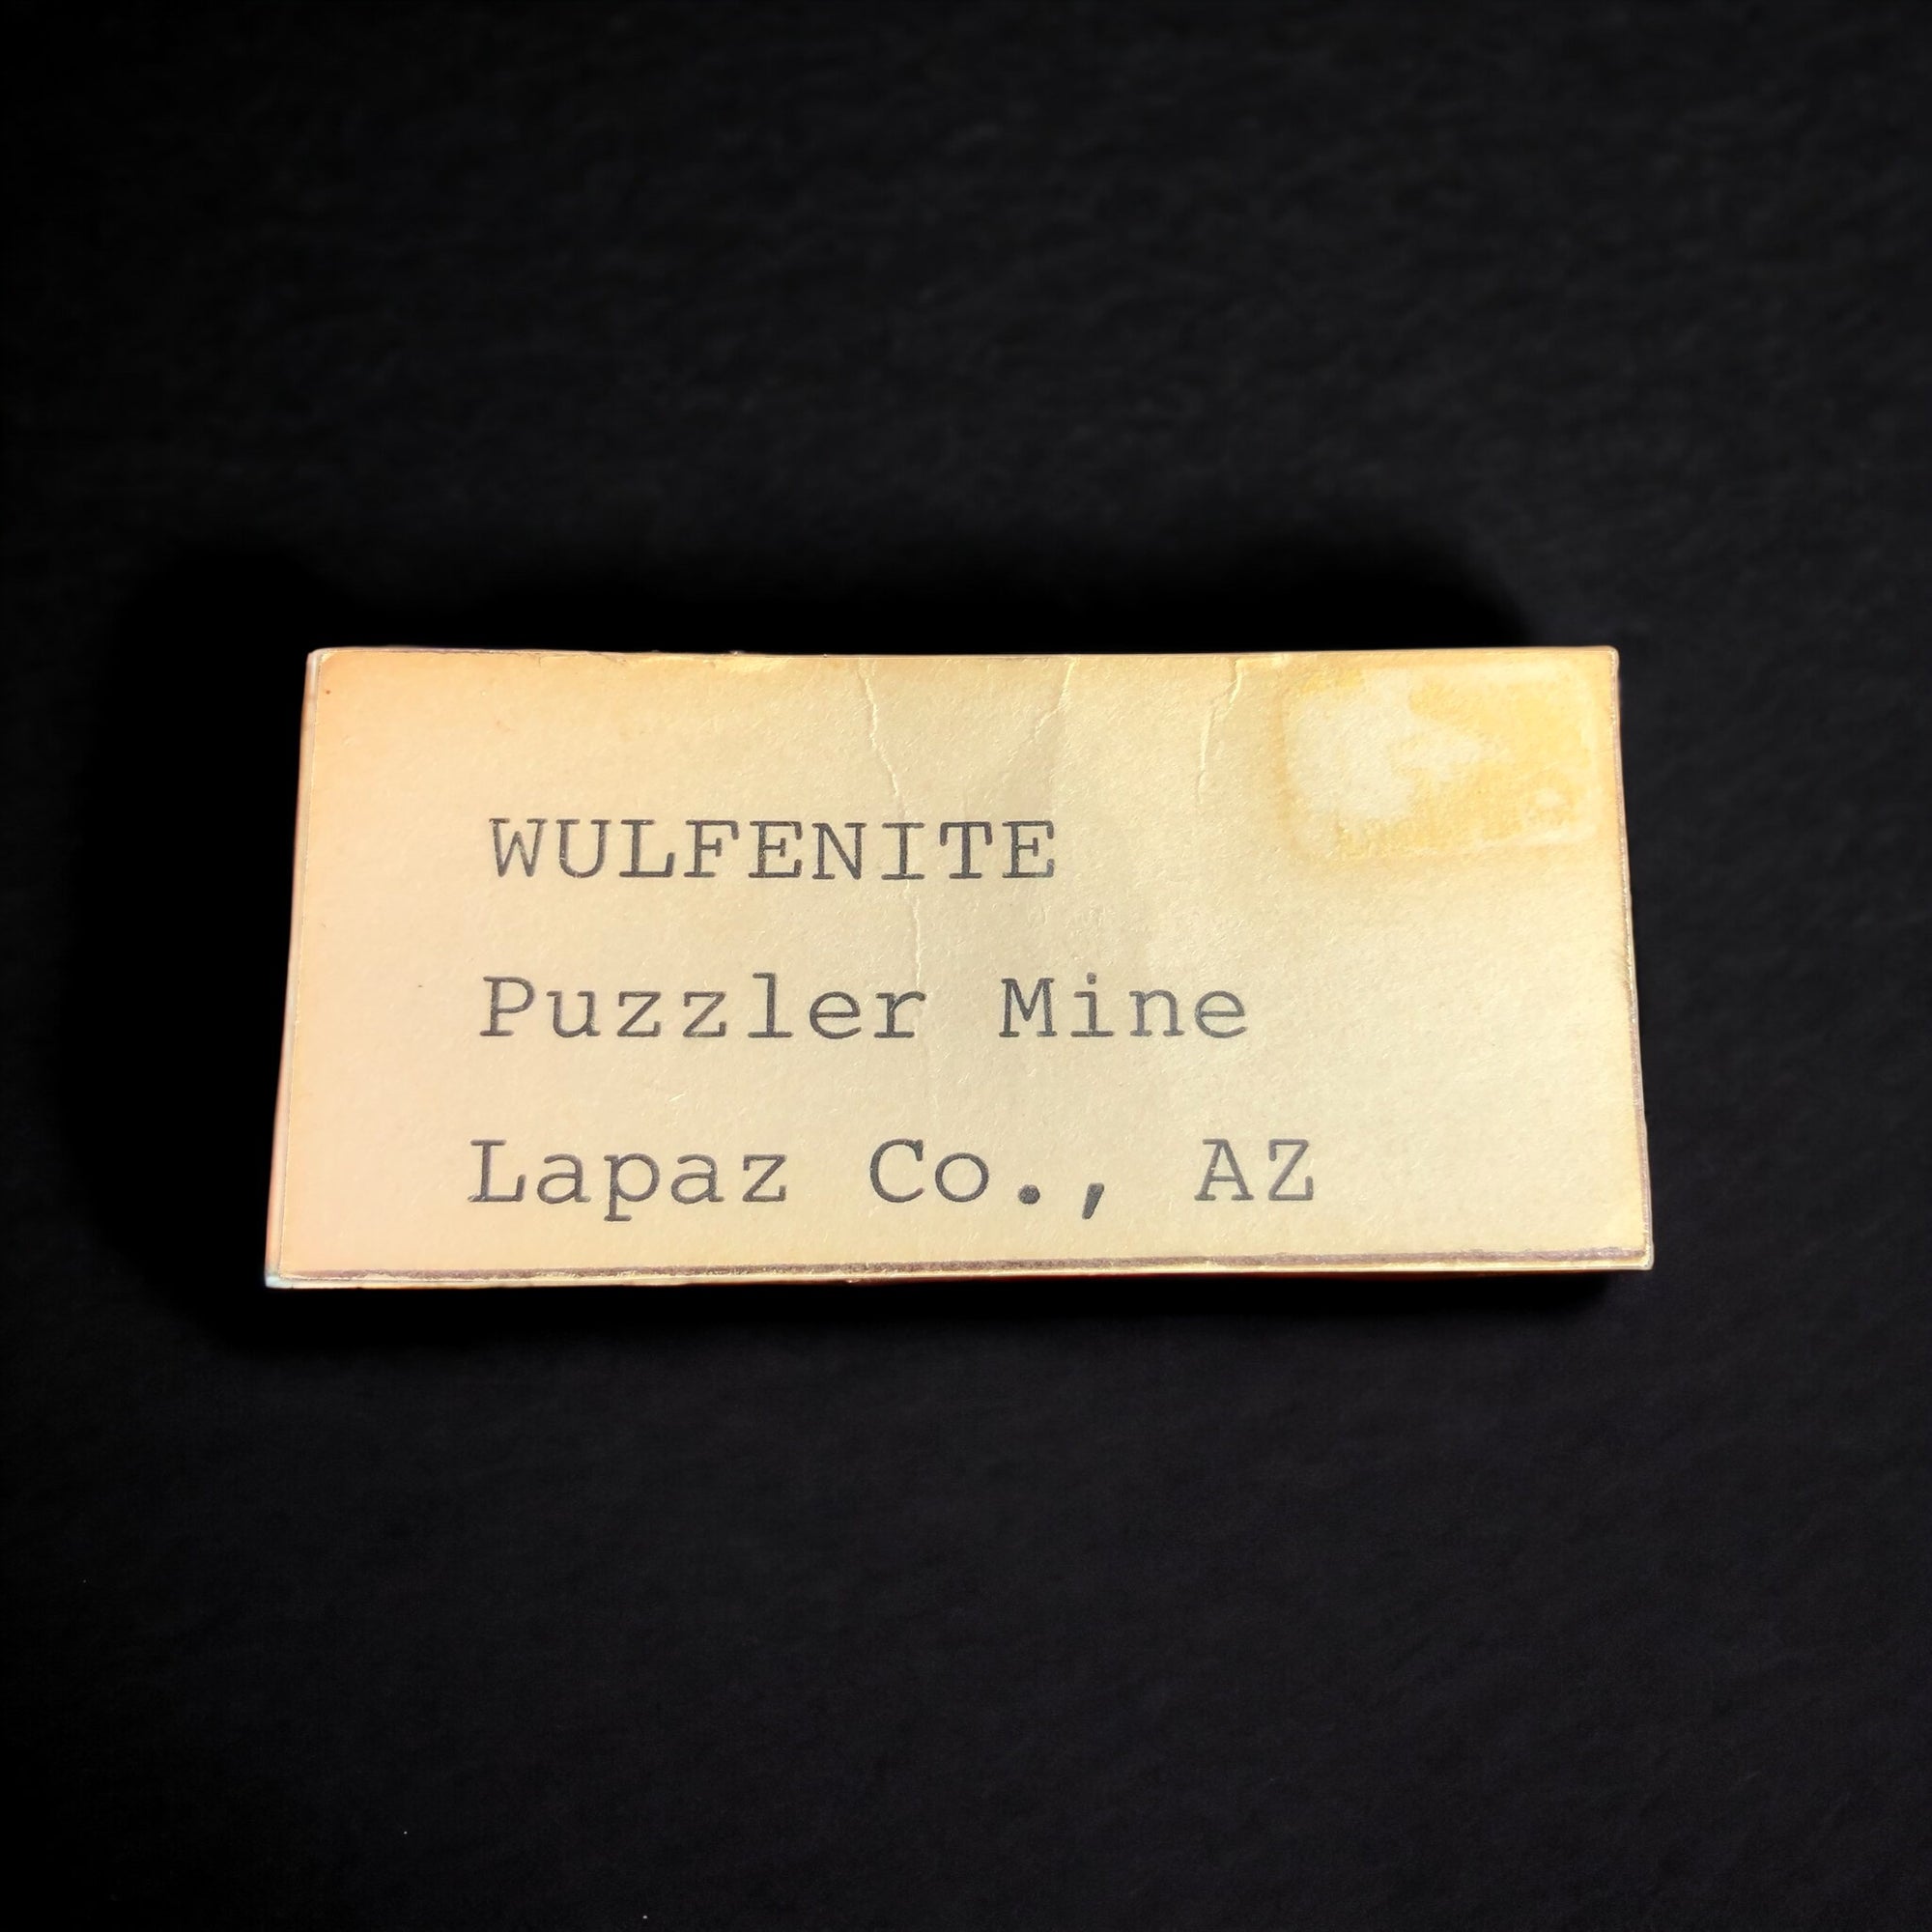 Wulfenite, Puzzler Mine, Arizona, USA